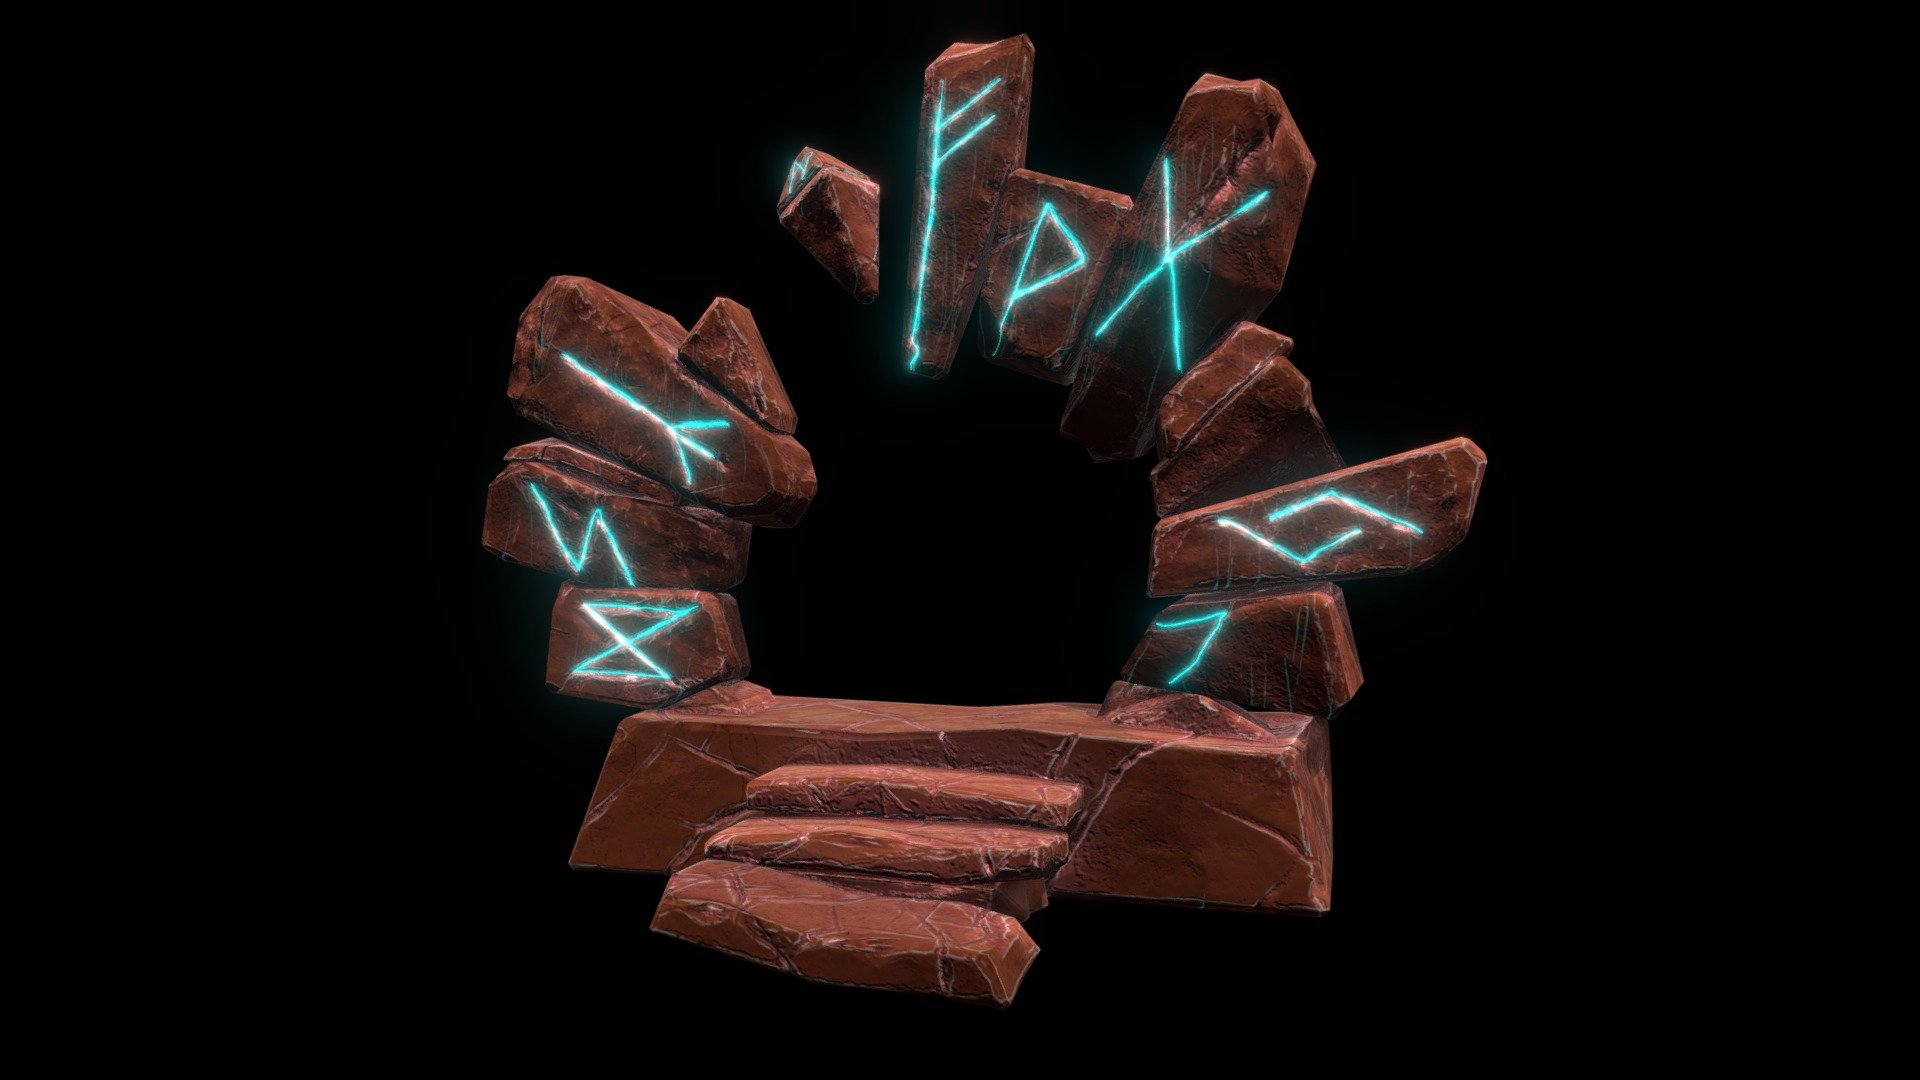 The Rune Portal My First Work! - Rune Portal - 3D model by uevalentsov 3d model